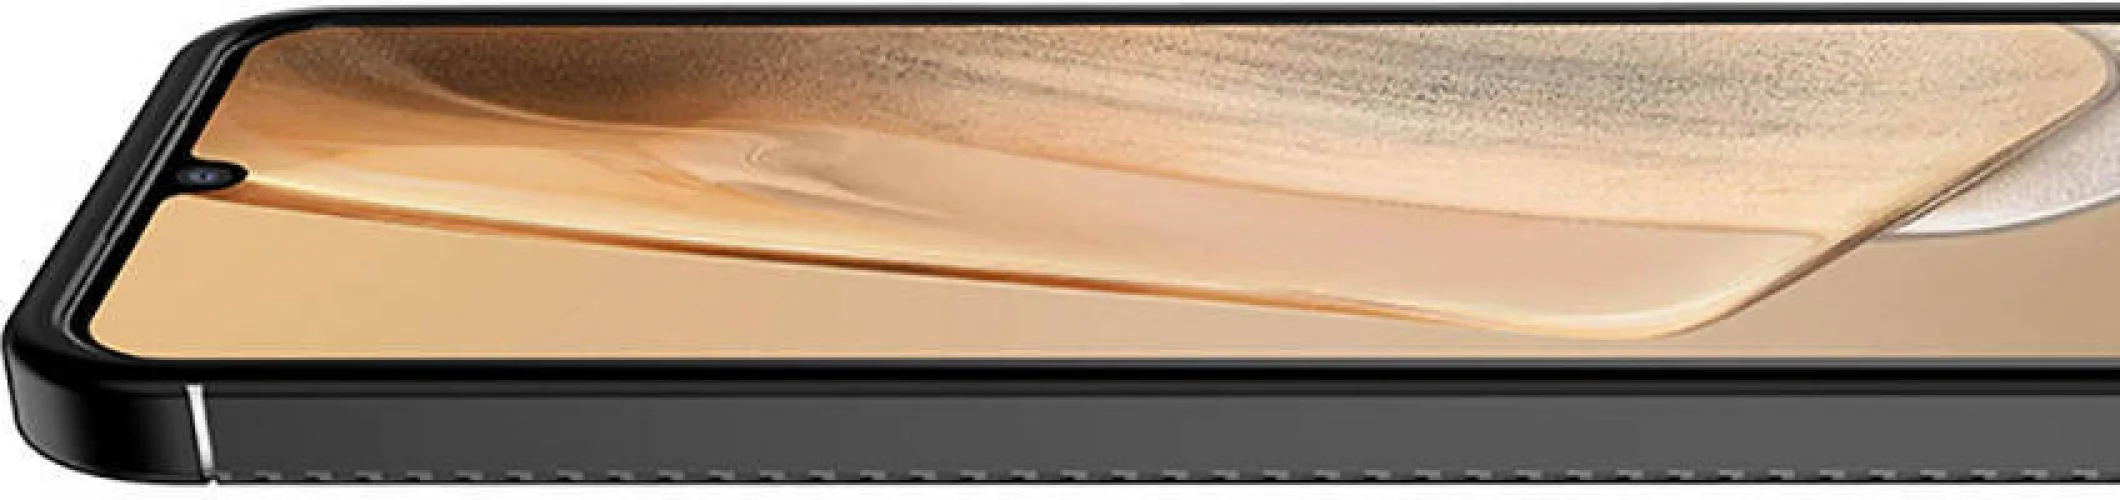 Samsung Galaxy A05 Kılıf Karbon Serisi Mat Fiber Silikon Negro Kapak - Siyah